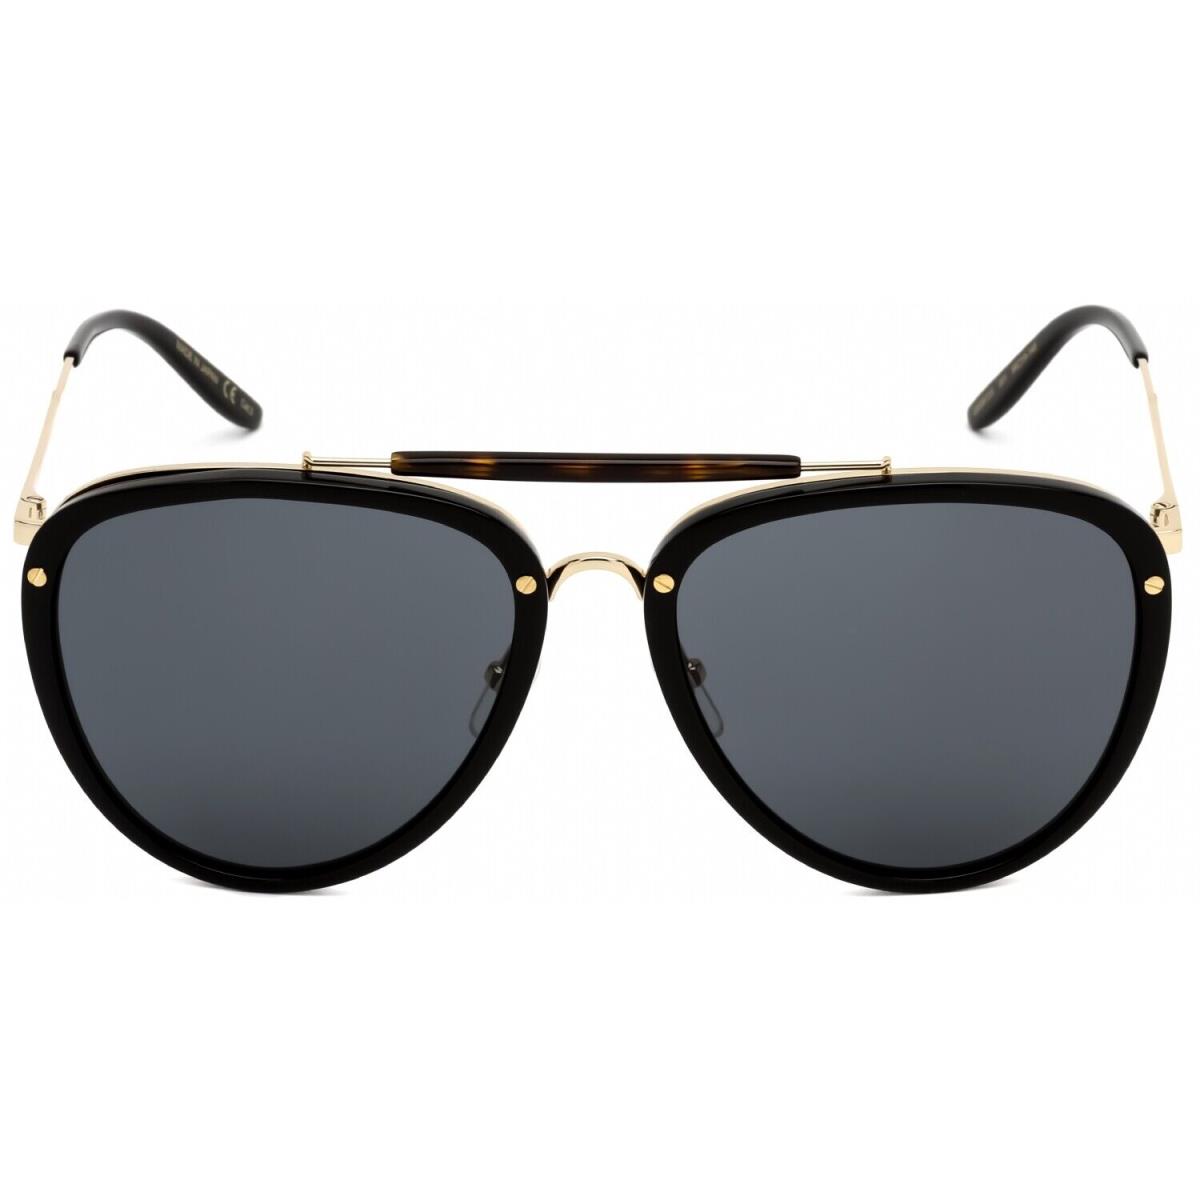 Gucci GG0672S-001-58 Sunglasses Size 58mm 145mm 19mm Black Unisex